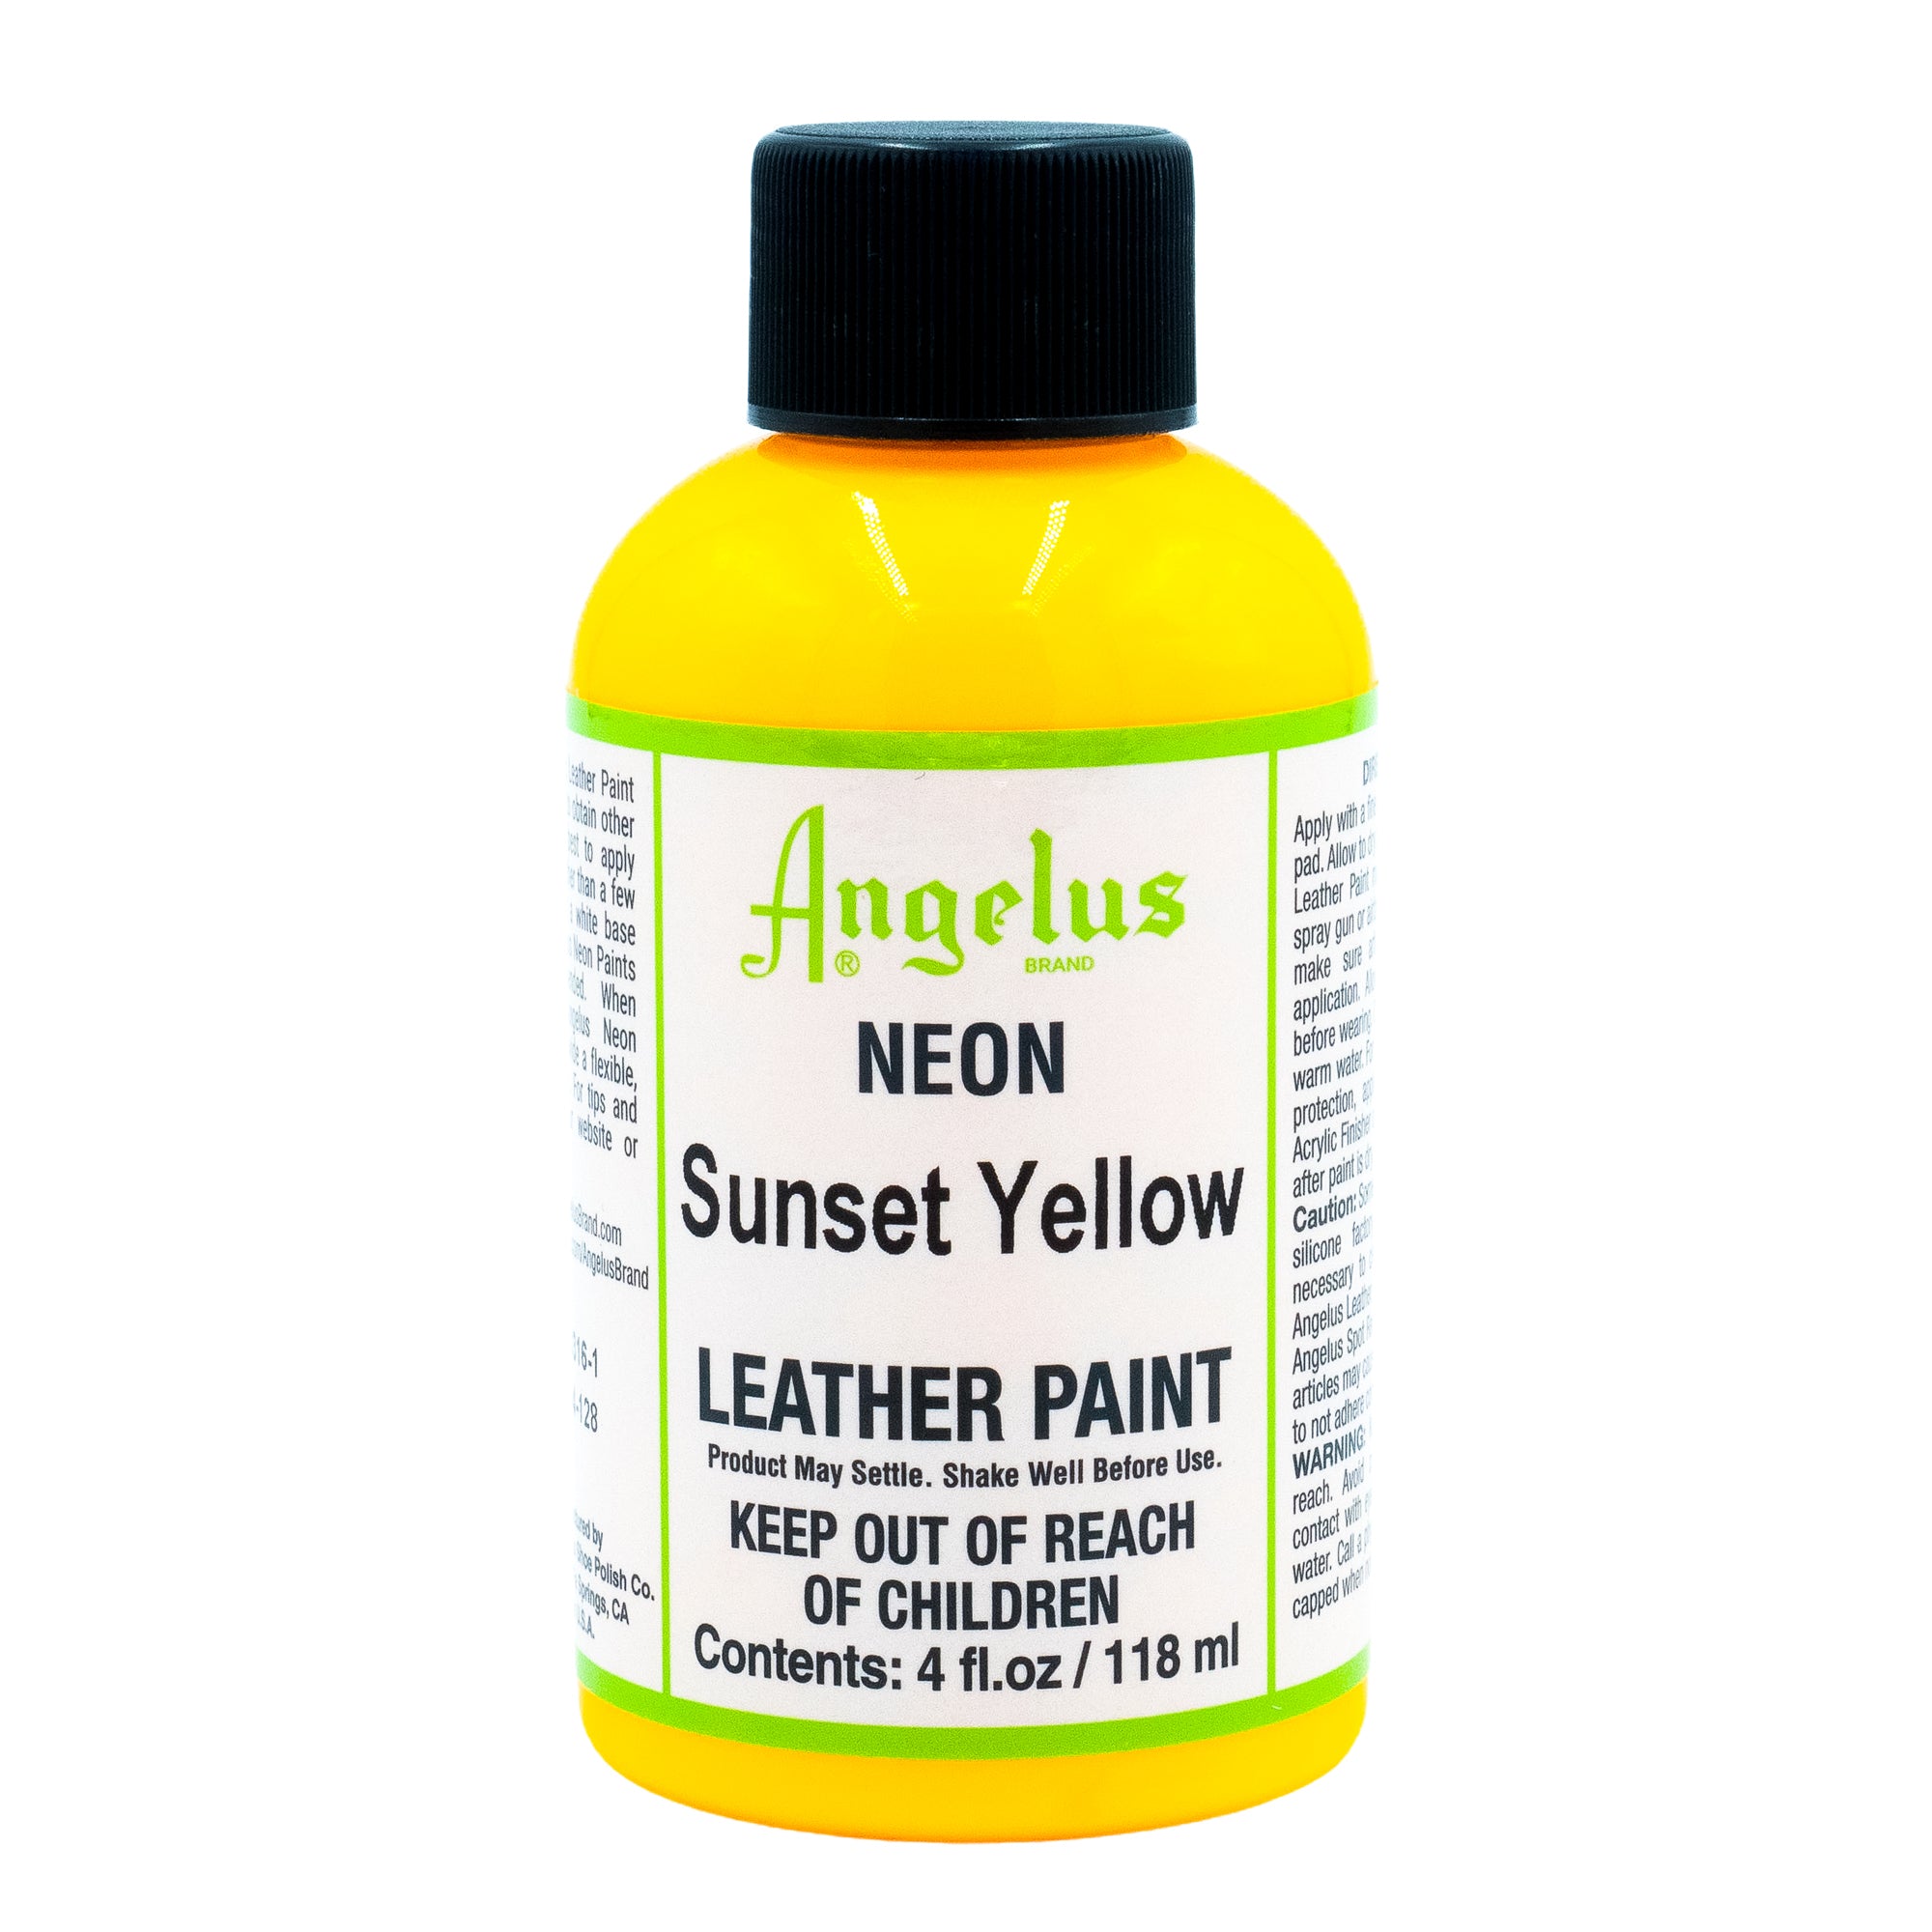 Angelus Leather Paint Neon Tropic Sun Yellow 1 oz